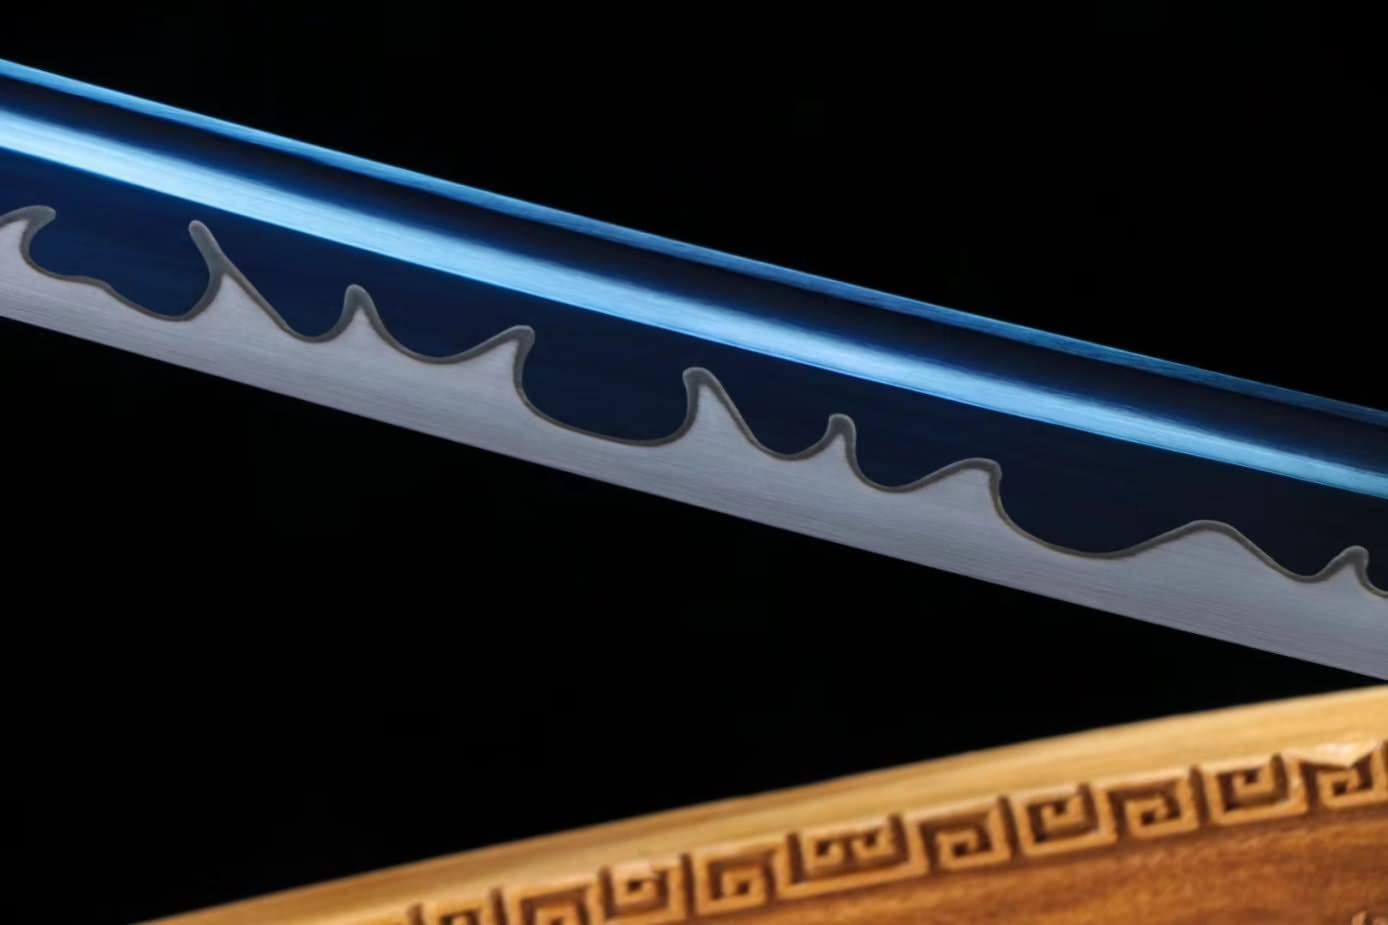 Katanas,Hand Forged High Carbon Steel Blades,Blue Scabbard